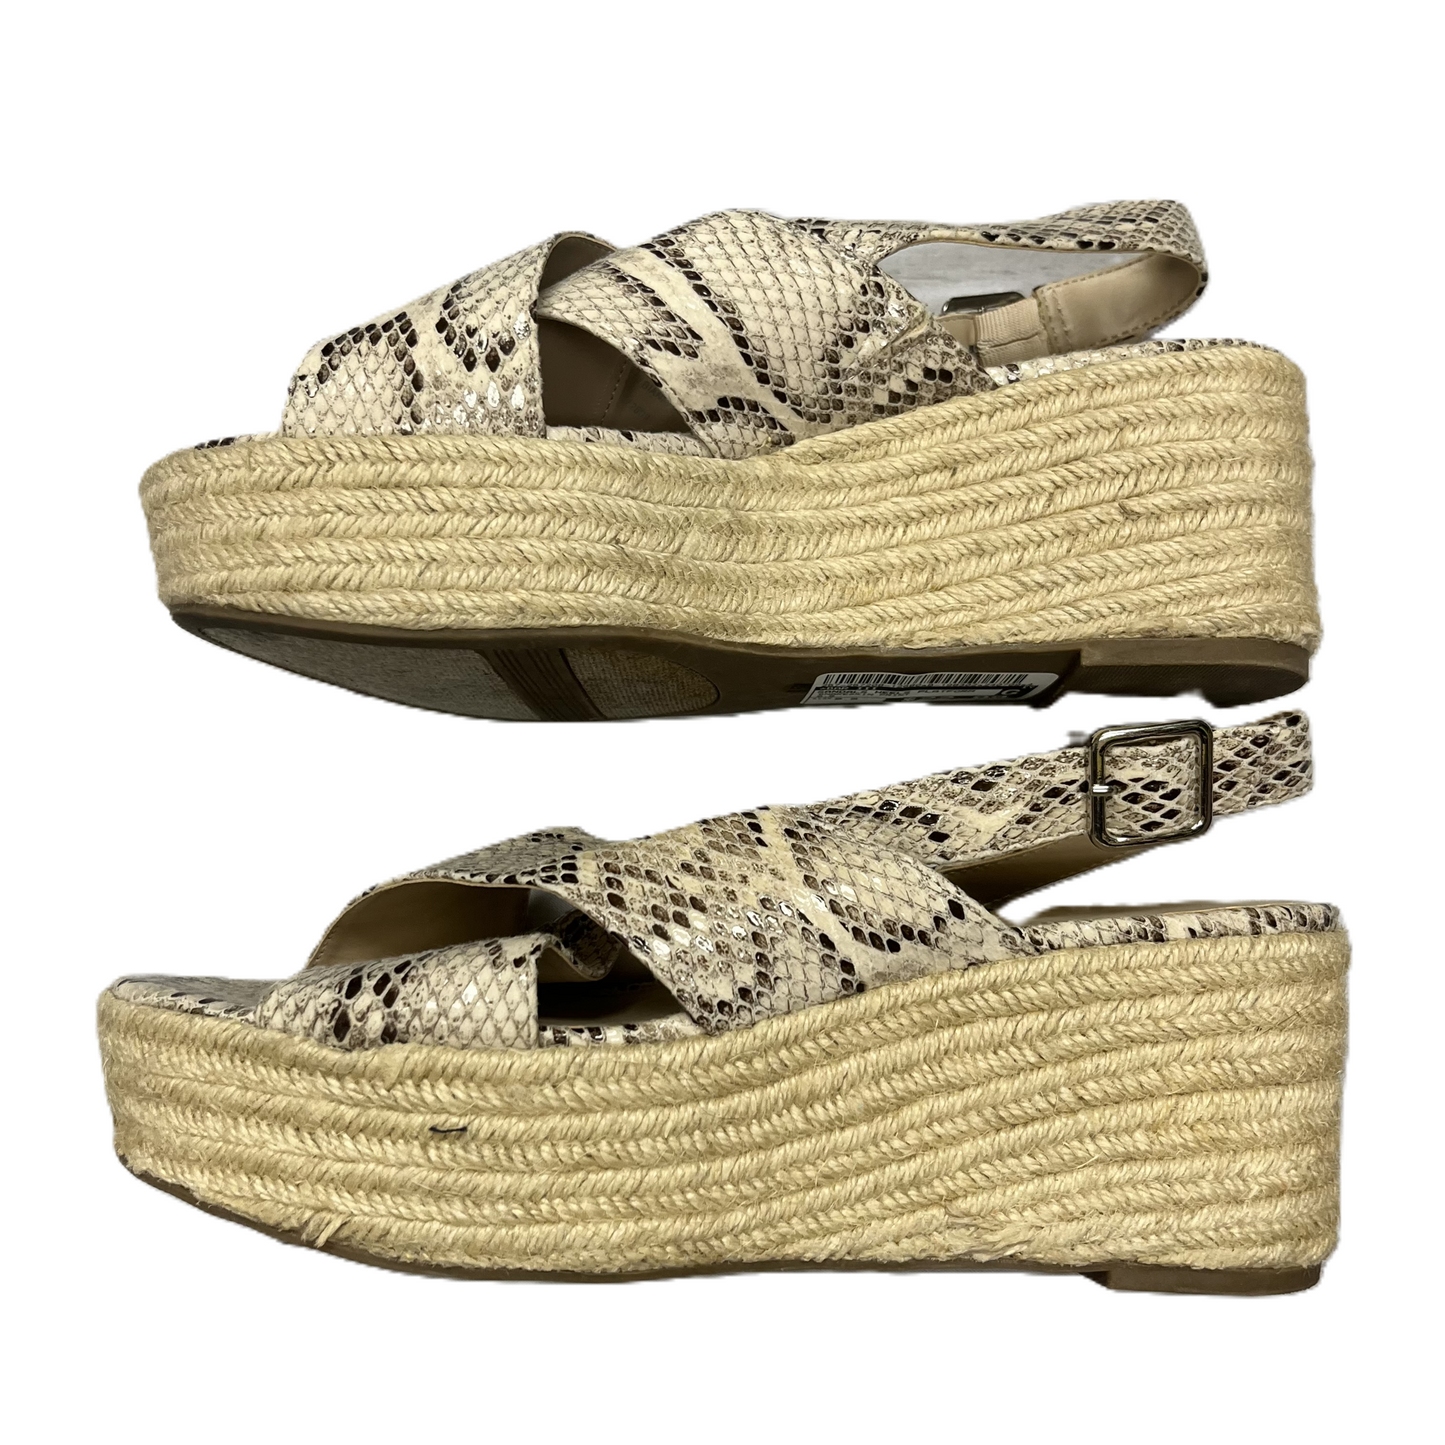 Snakeskin Print Sandals Heels Platform By Bar Iii, Size: 9.5